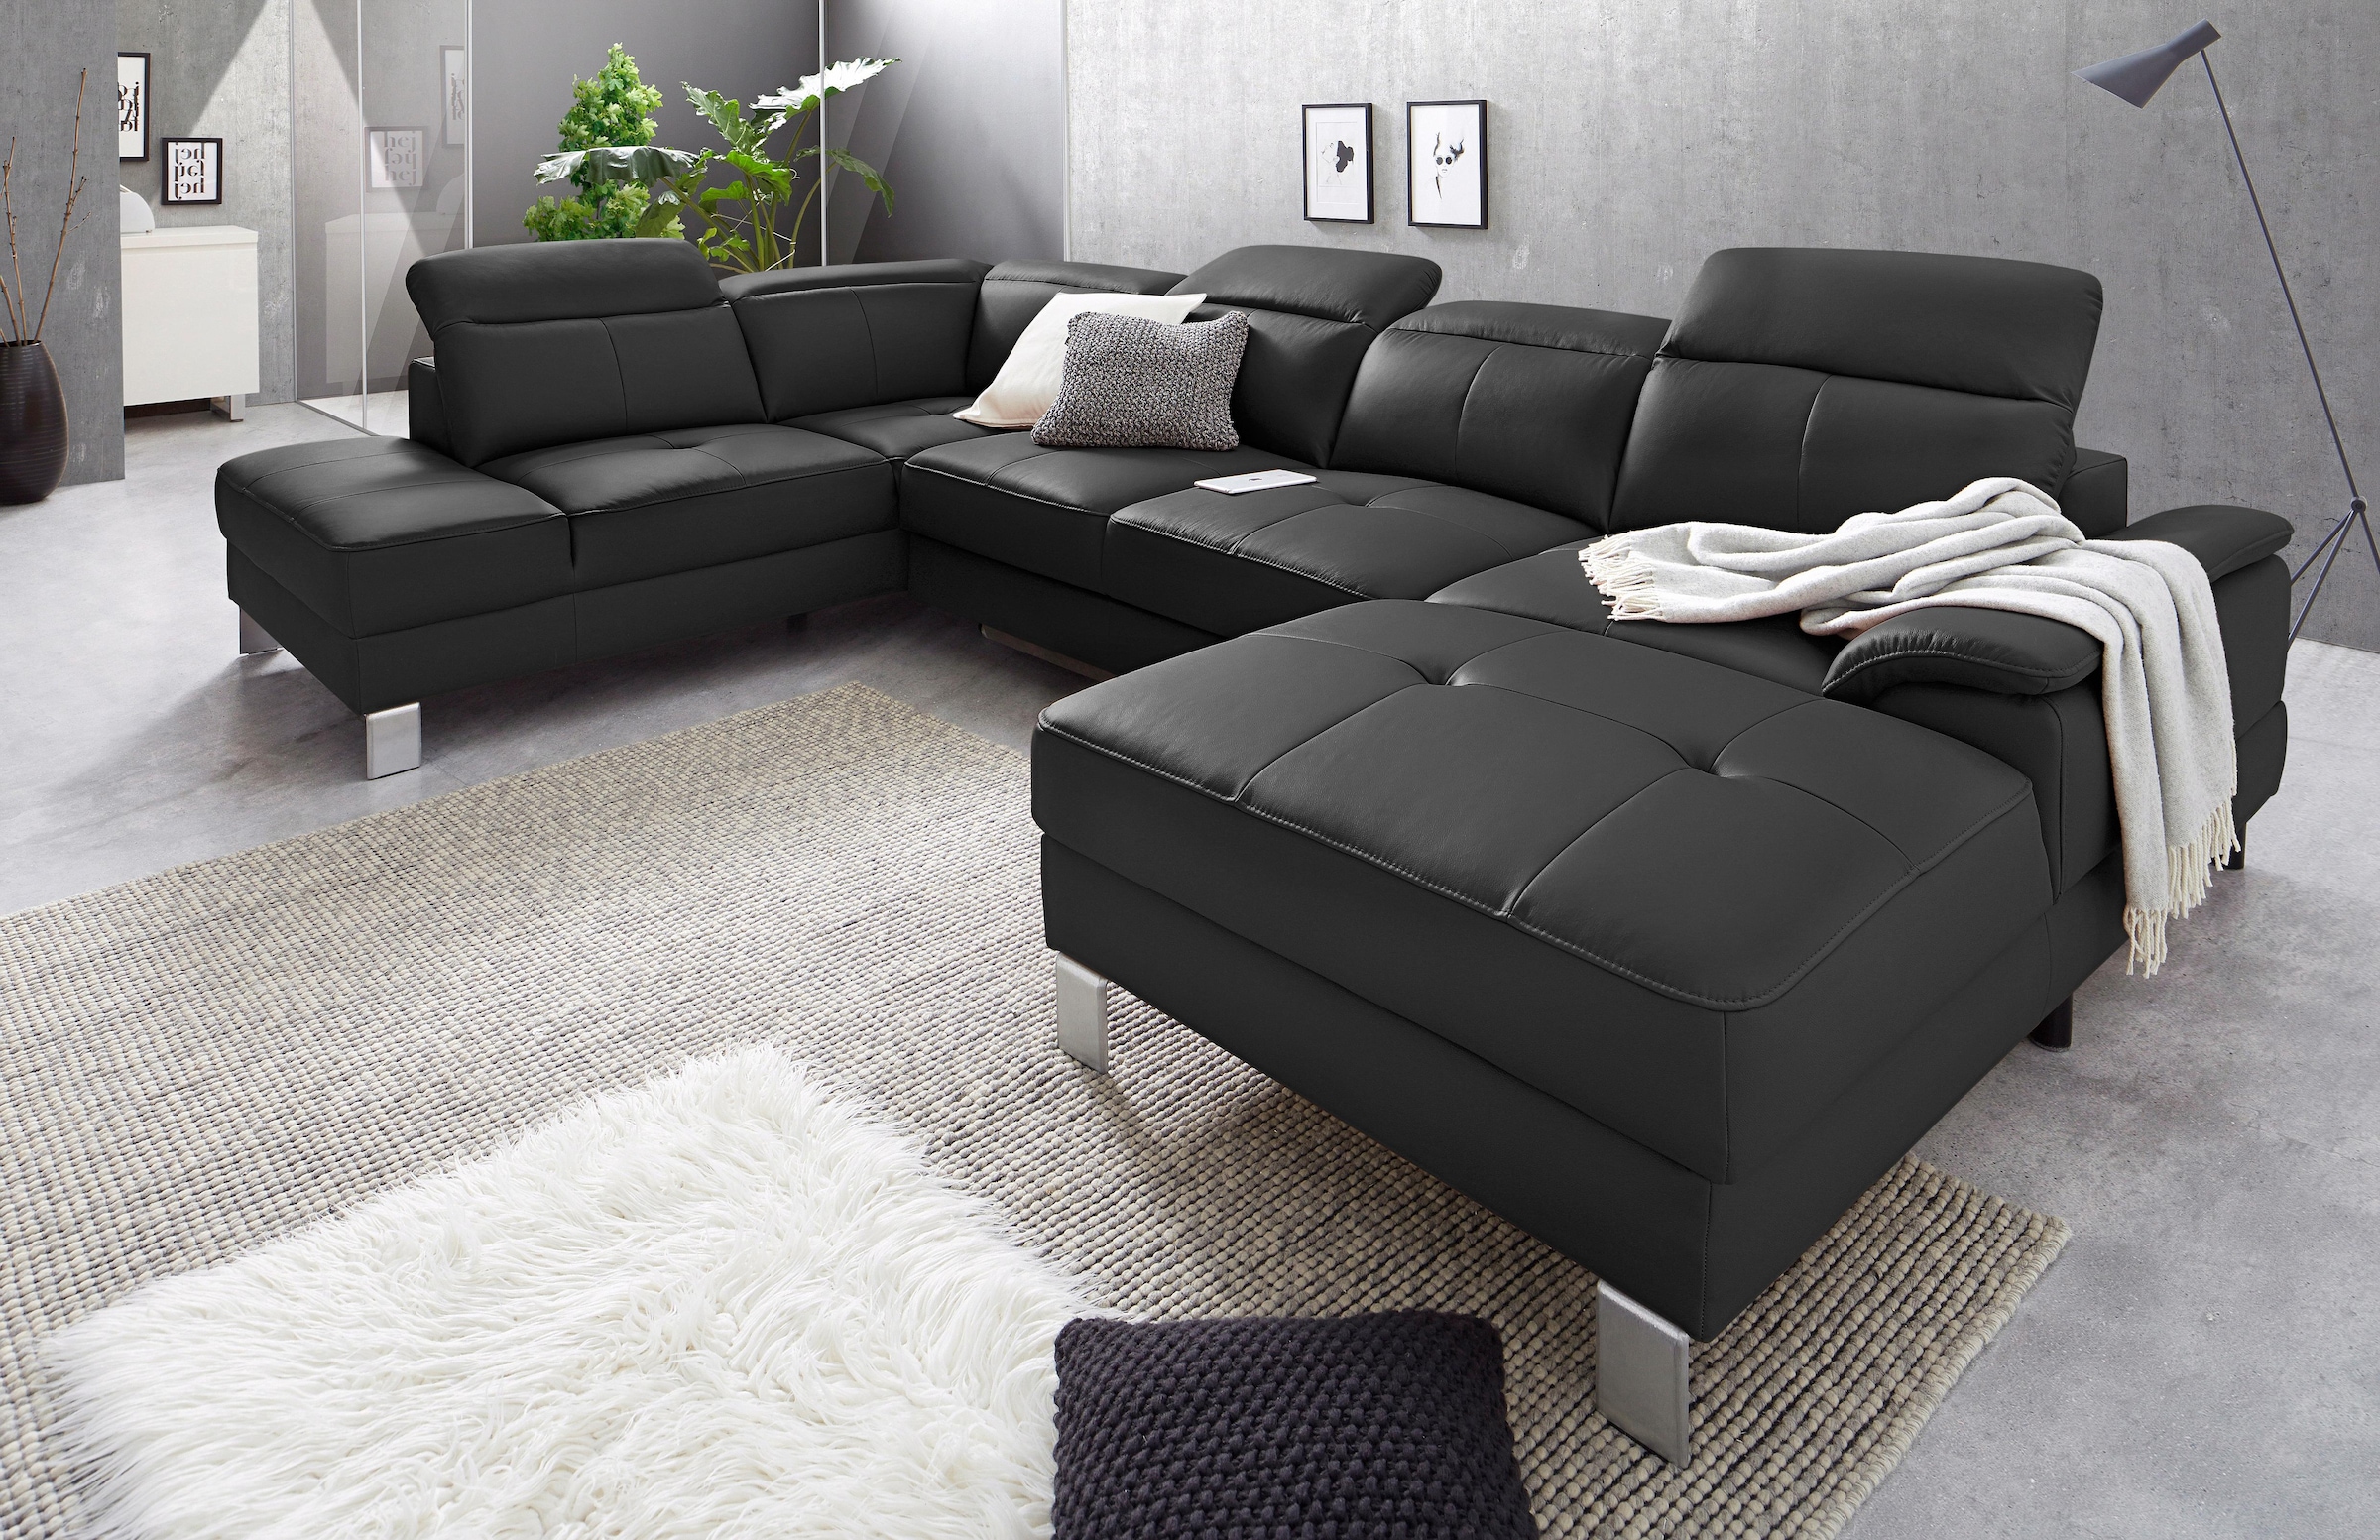 exxpo - sofa fashion Wohnlandschaft »Mantua 2, U-Form«, inkl. Kopf- bzw. Rückenverstellung, wahlweise mit Bettfunktion